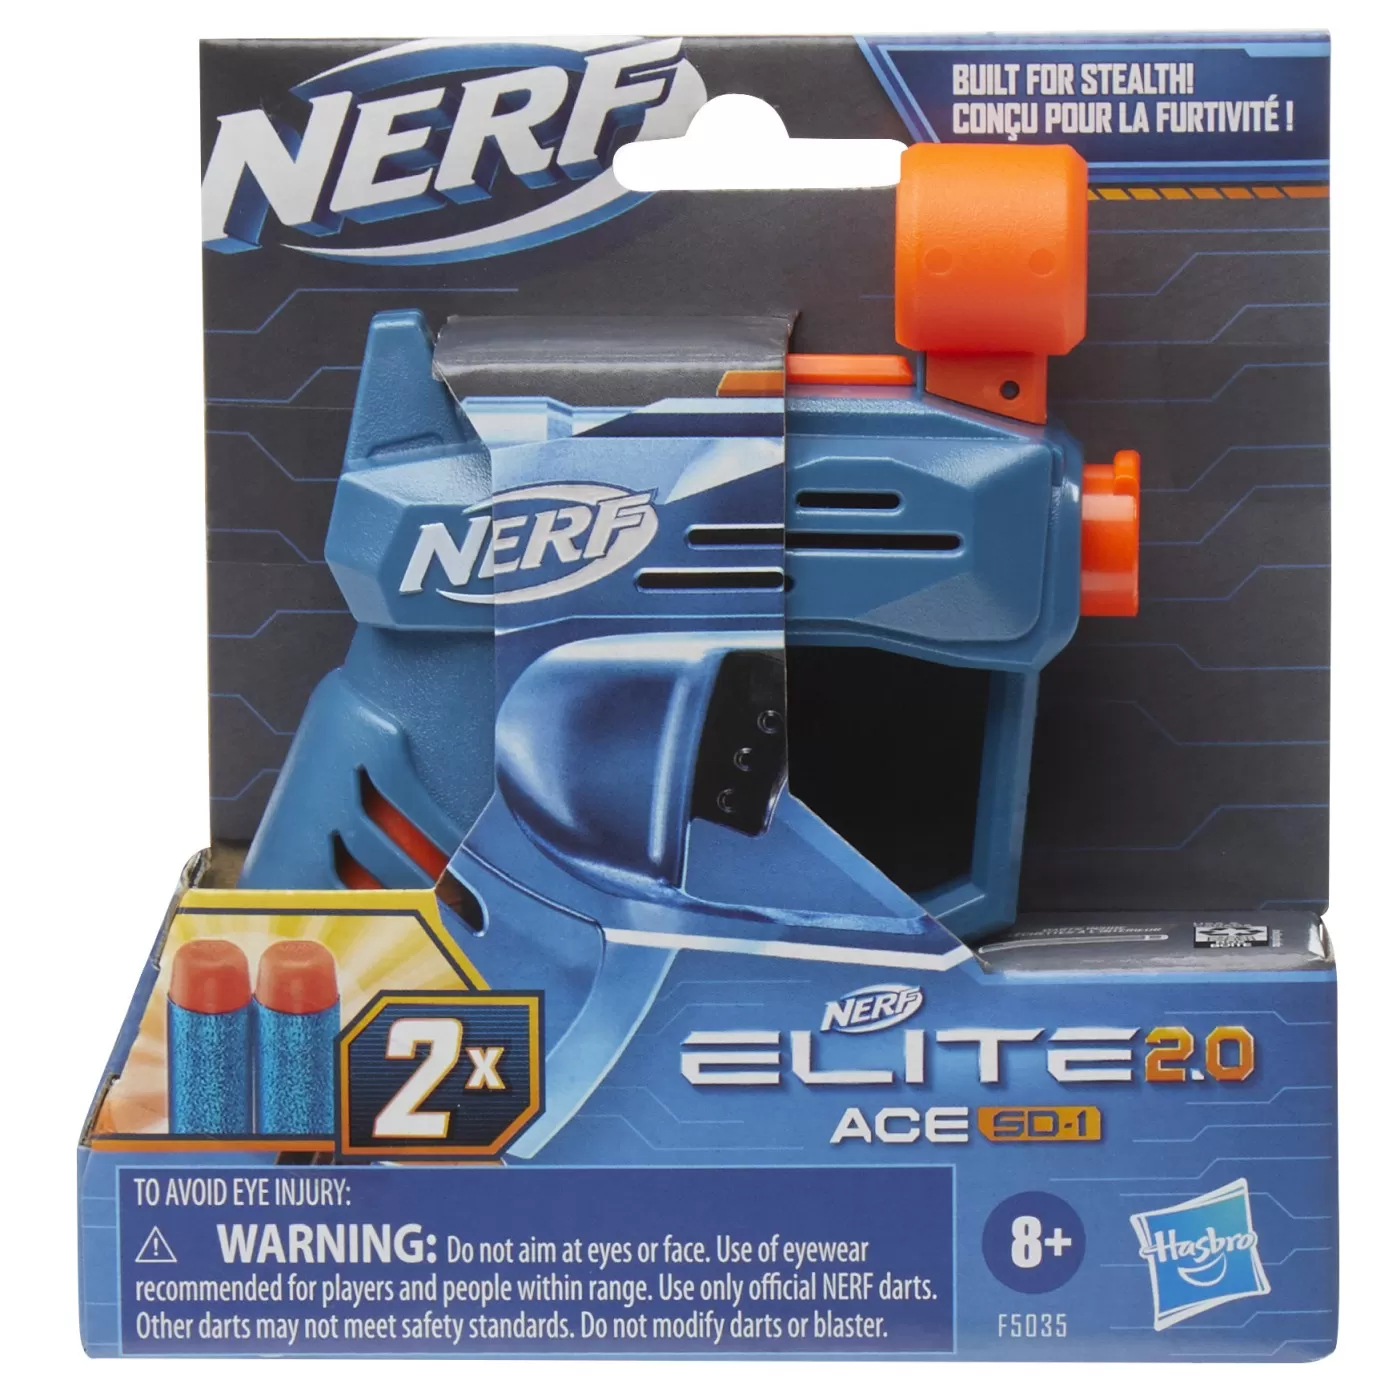 Blaster Nerf elite 2.0 Ace SD-1, +8 ani, Hasbro